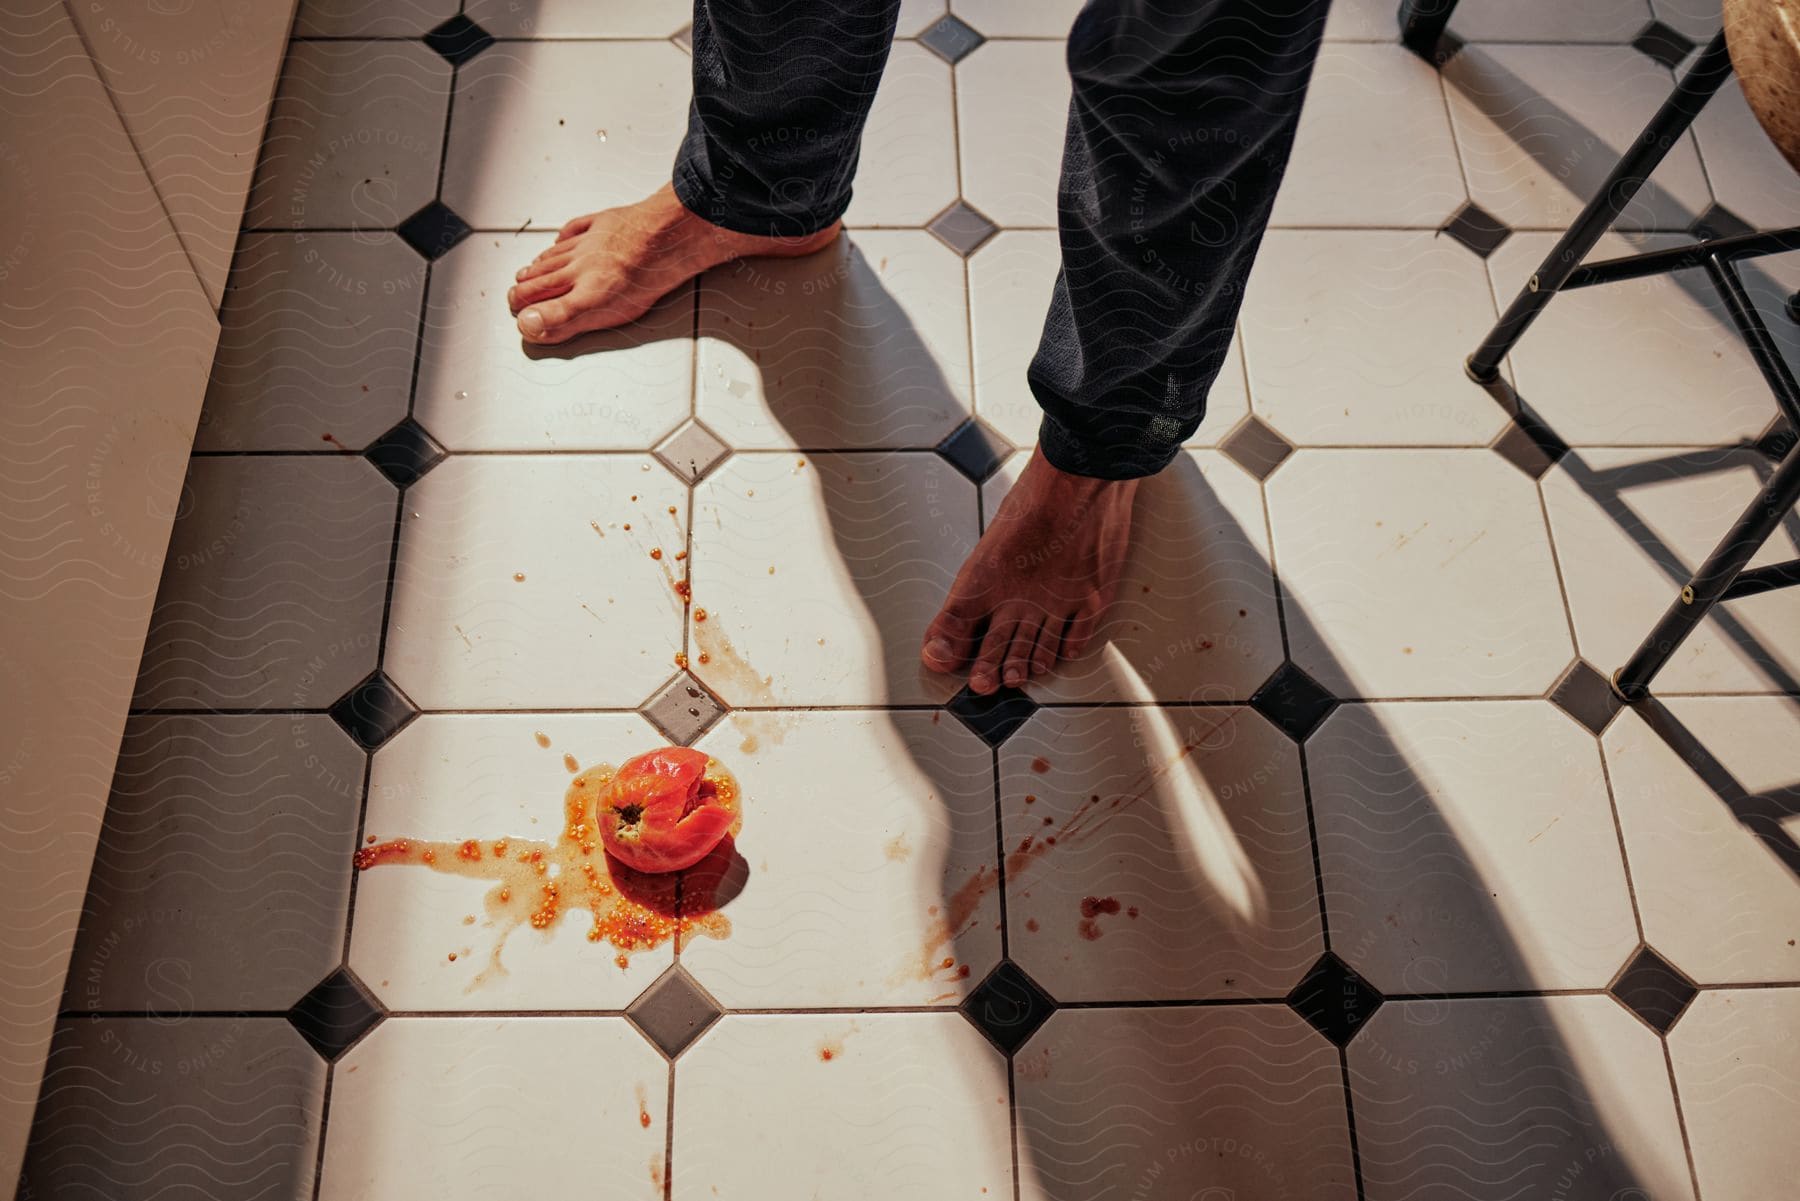 Man stands on kitchen tiles splattered by fallen tomato.